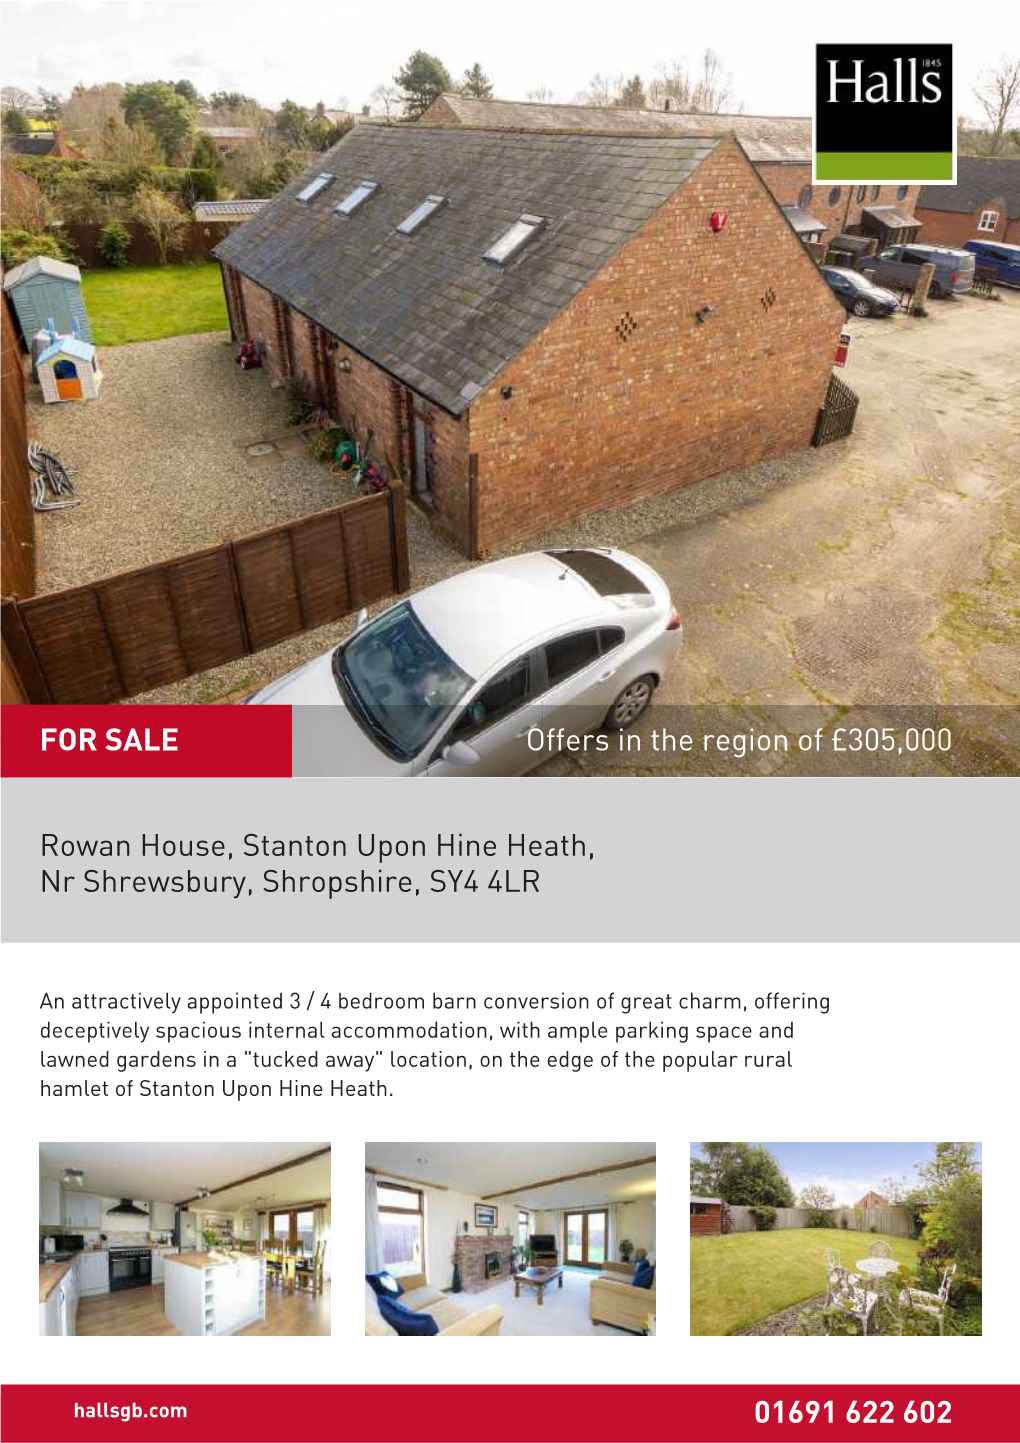 Rowan House, Stanton Upon Hine Heath, Nr Shrewsbury, Shropshire, SY4 4LR